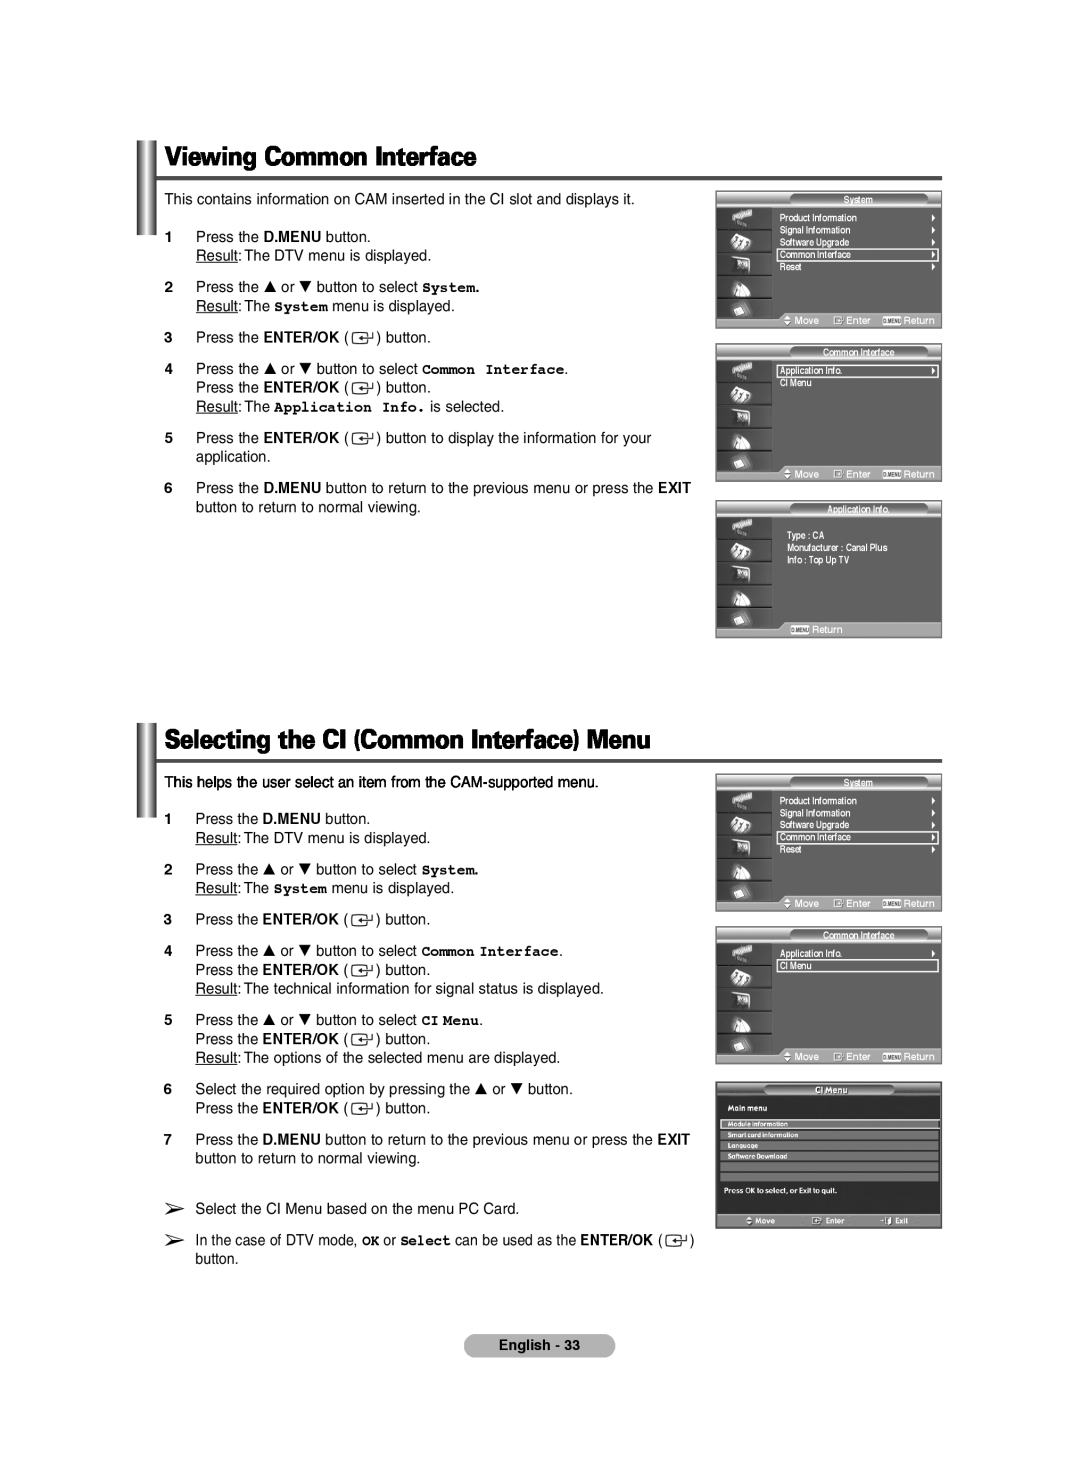 Samsung PS-42E7HD, PS-42E71HD manual Viewing Common Interface, Selecting the CI Common Interface Menu, English 